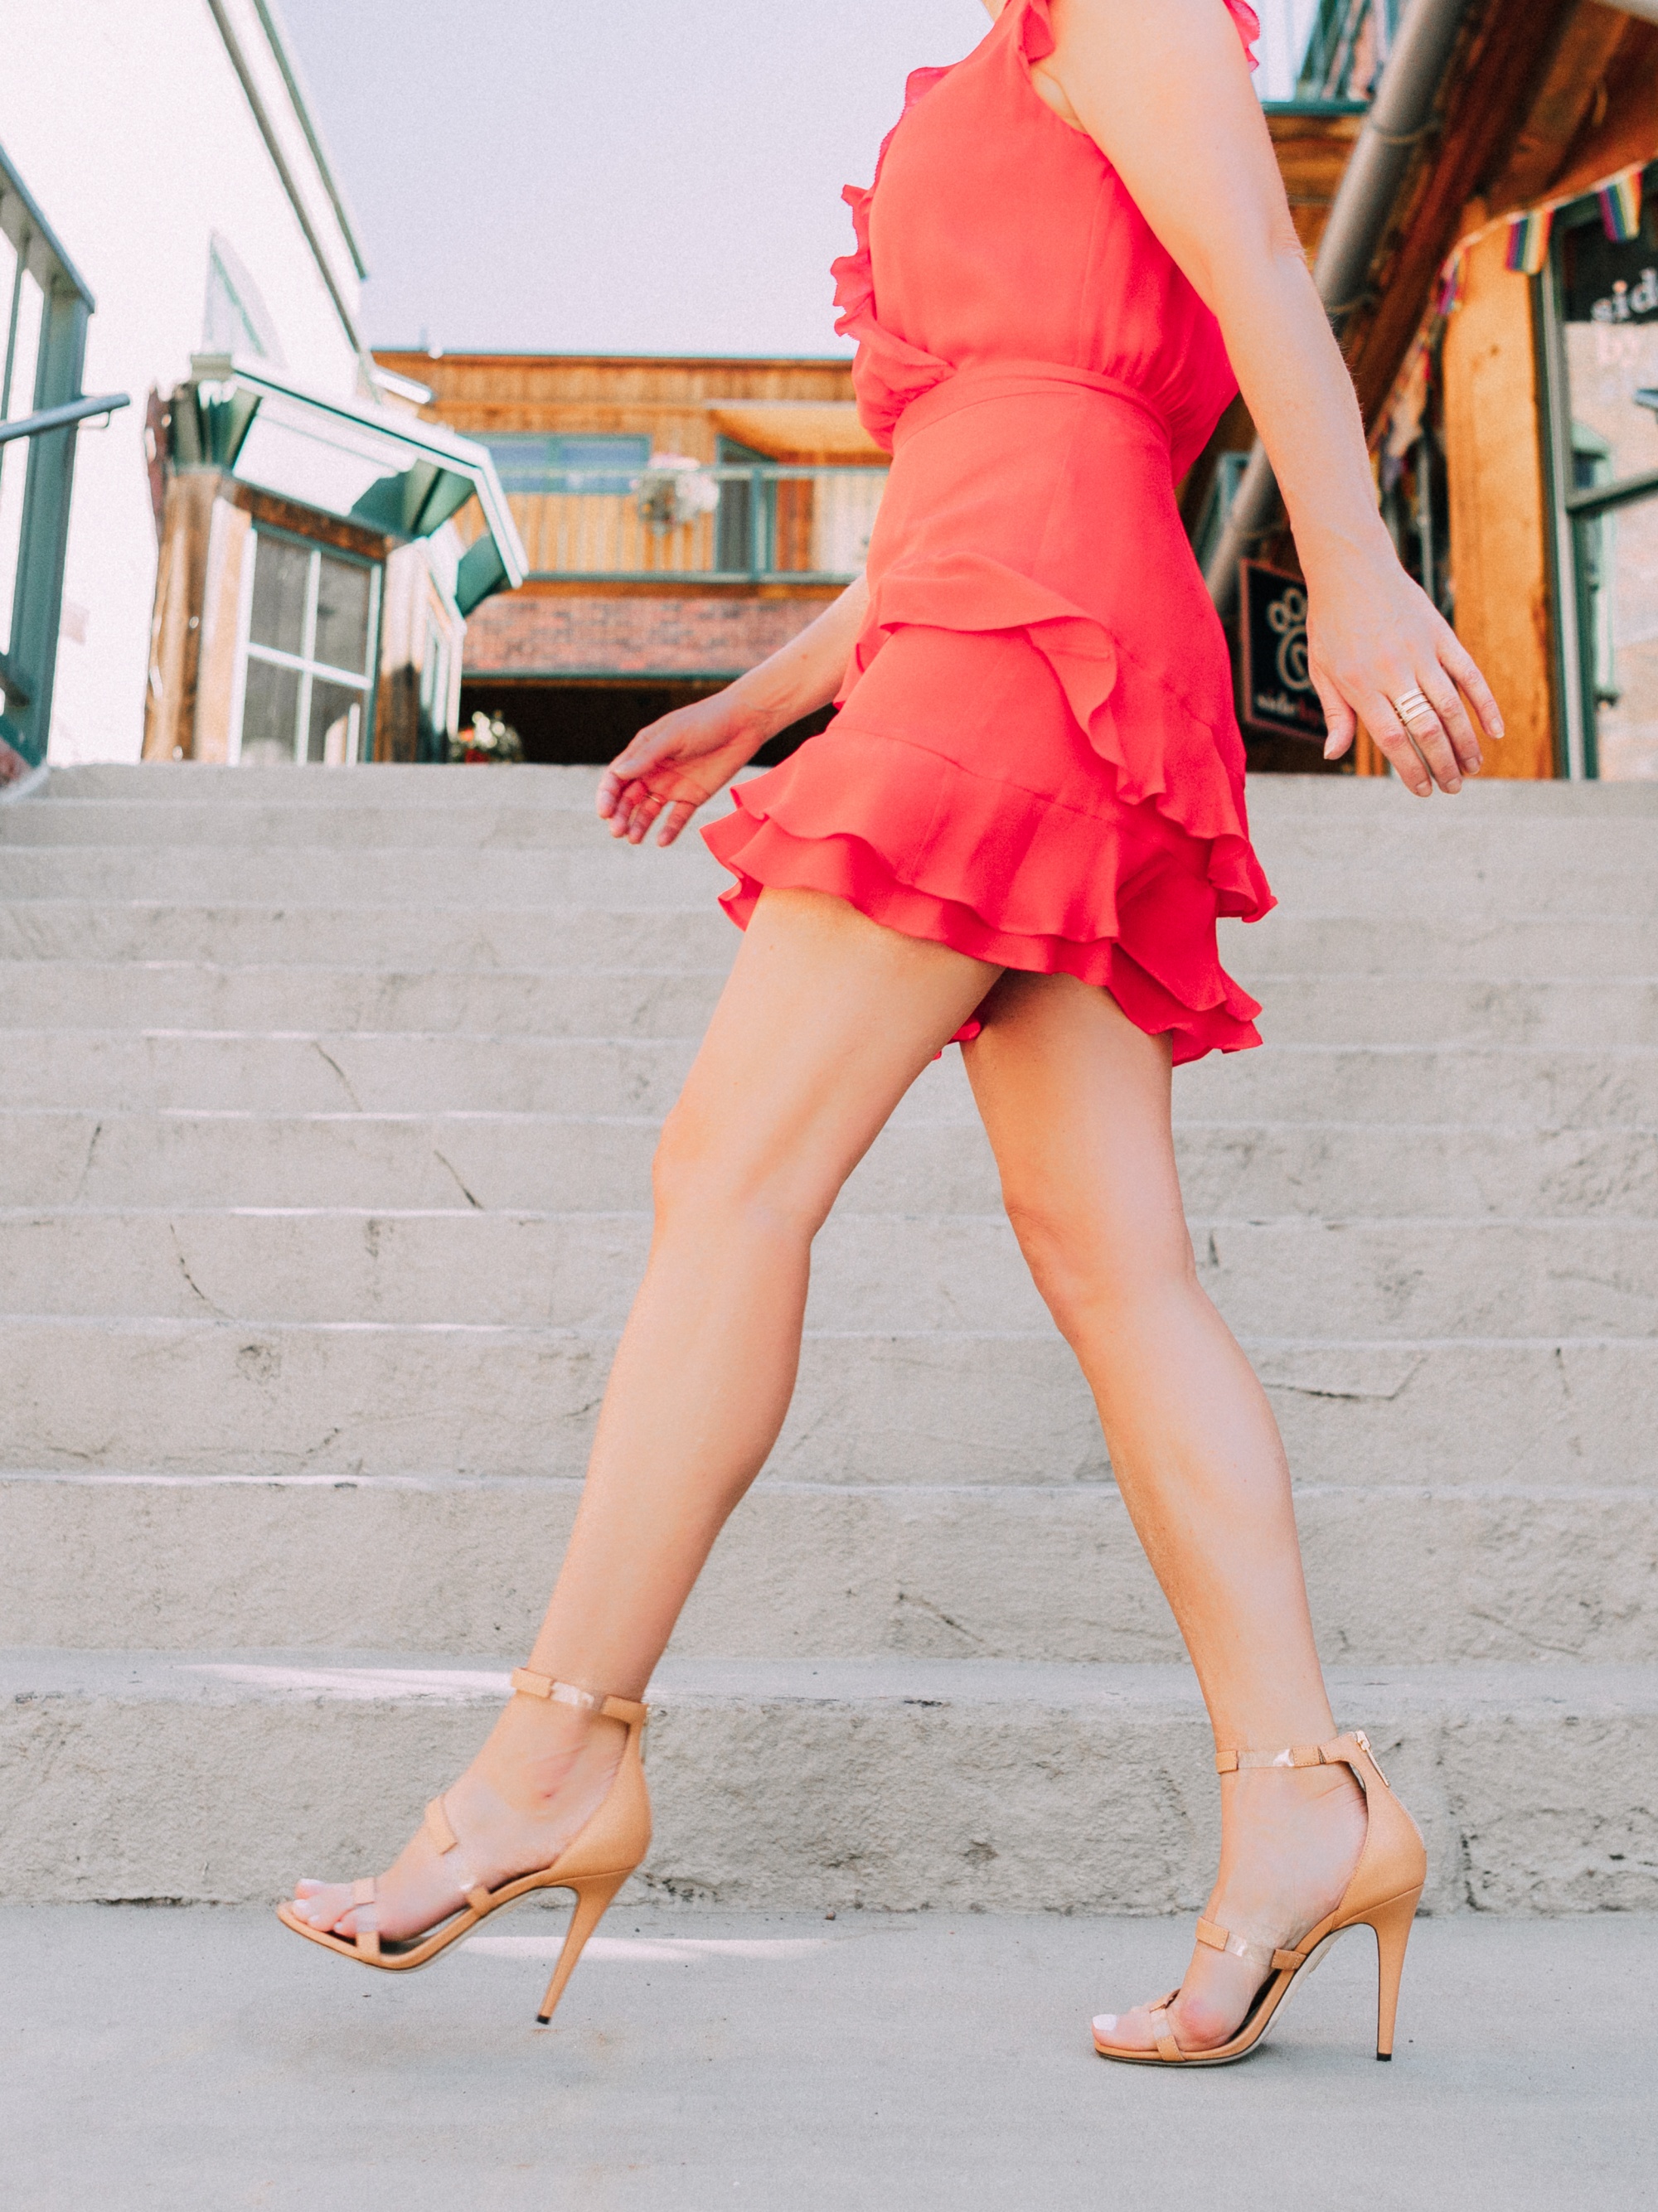 Tamara Mellon, Fashion blogger Erin Busbee of BusbeeStyle.com wearing a red ruffle dress with stunning Tamara Mellon Frontline heels in Telluride, Colorado, transparent sandals